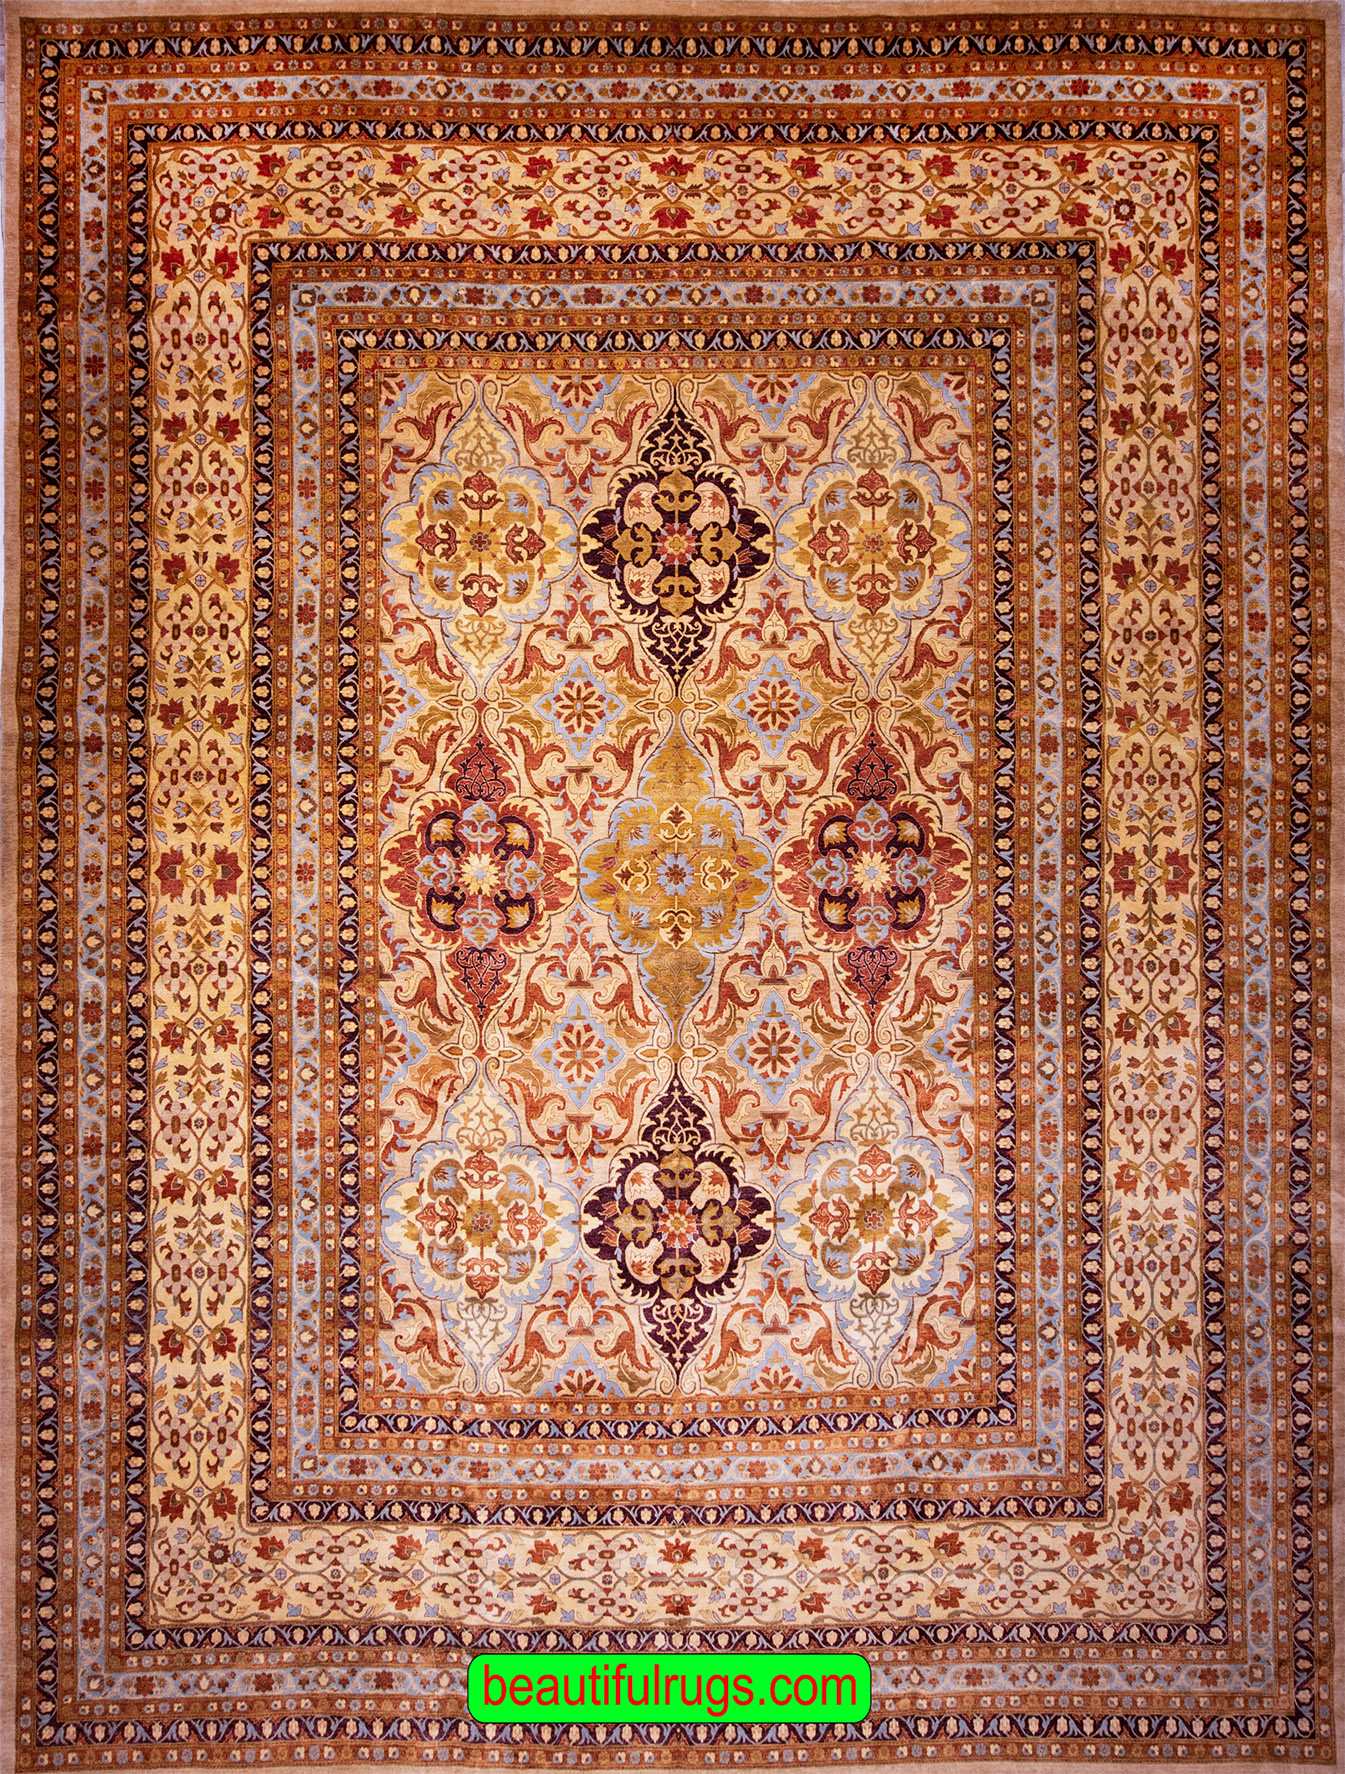 Tabriz design rug in beige and brown color for large living room. Size 12.2x14.10